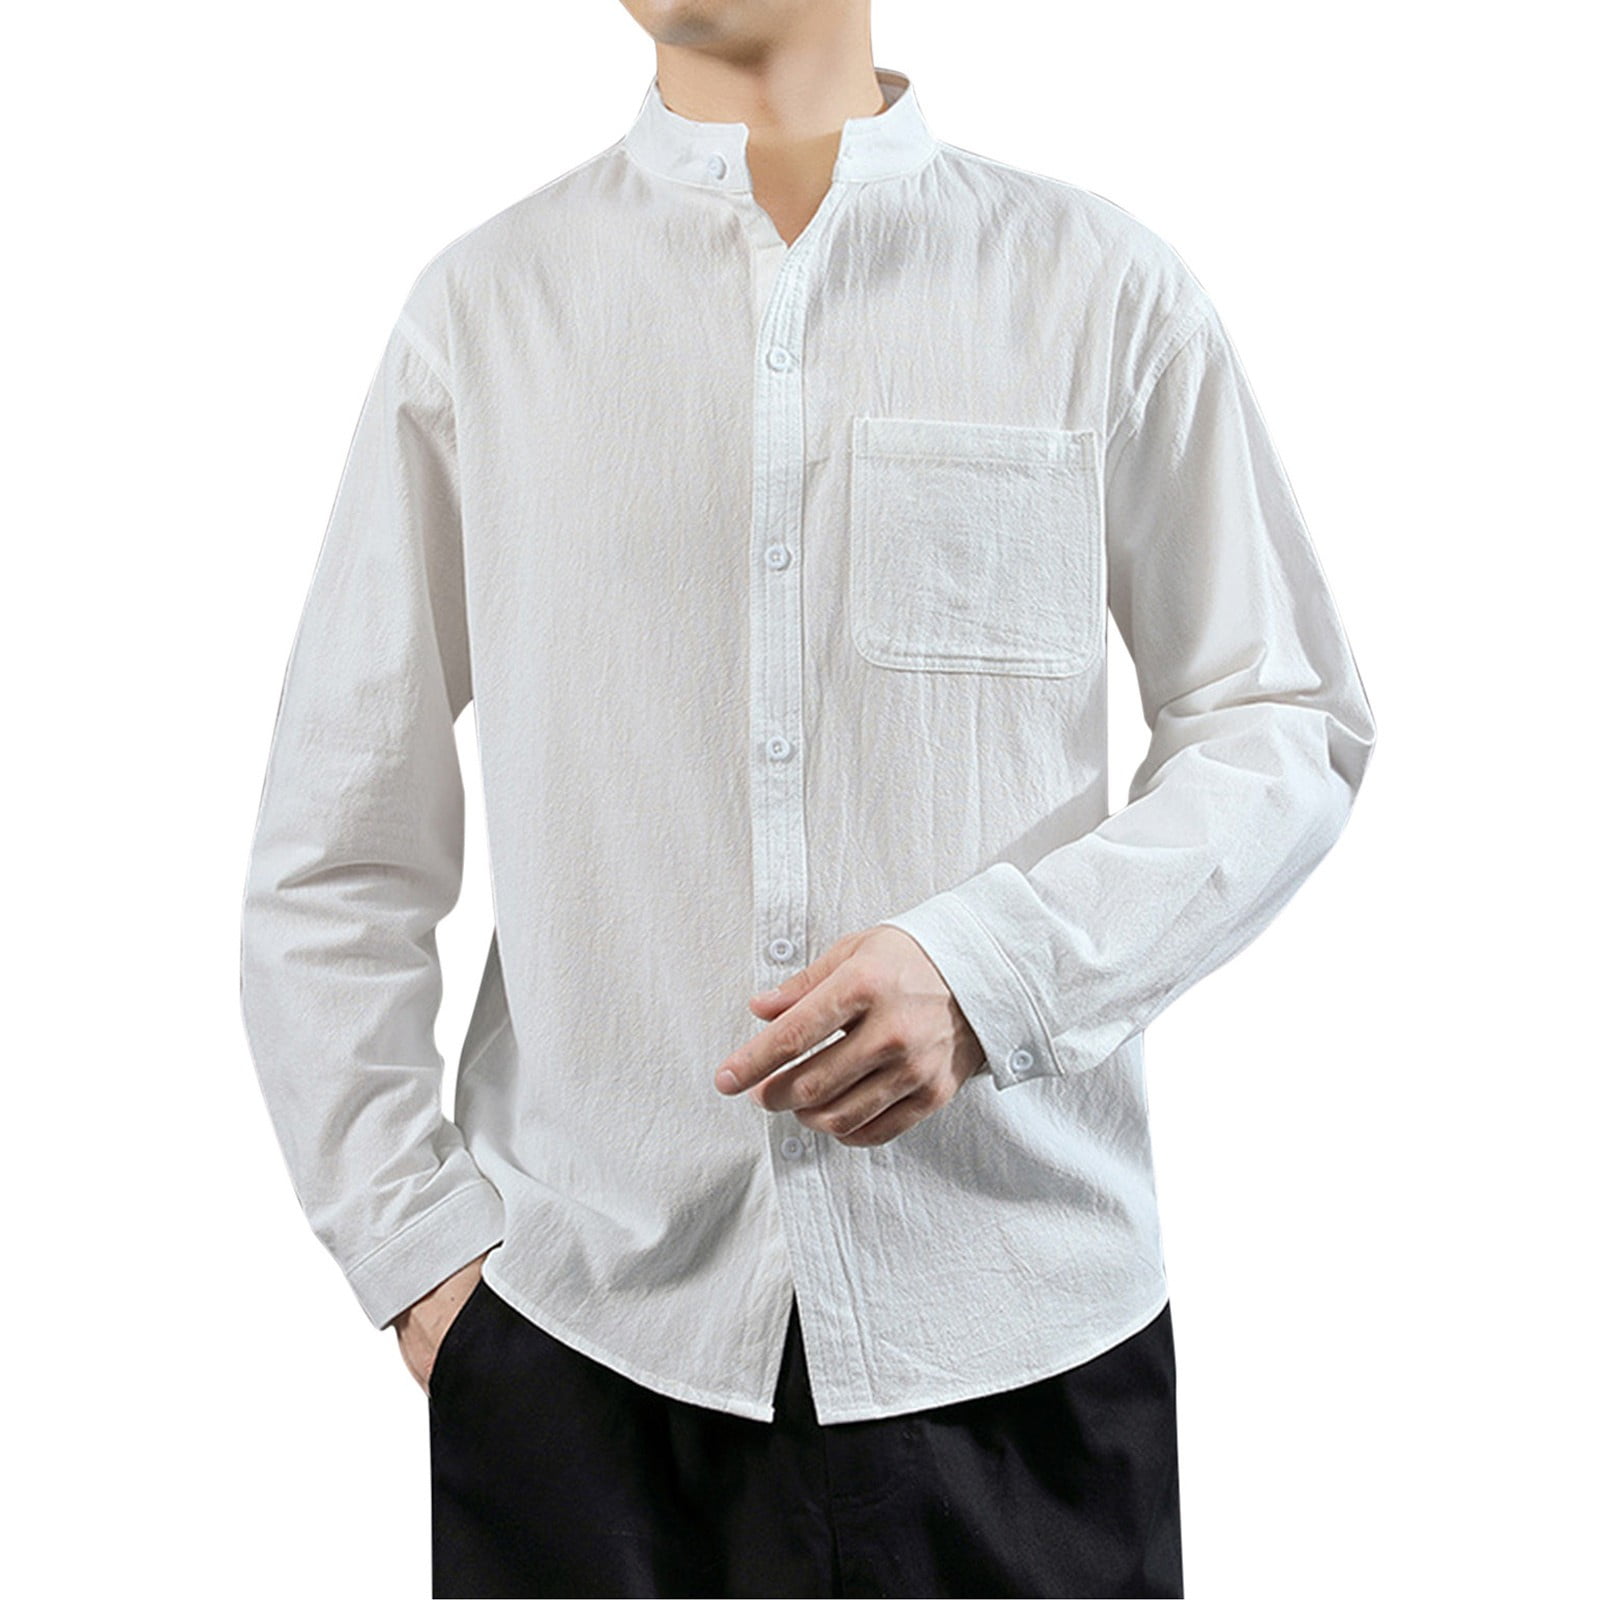 CLZOUD Men's Work Shirts White Cotton Men's Casual Solid Long Sleeve ...